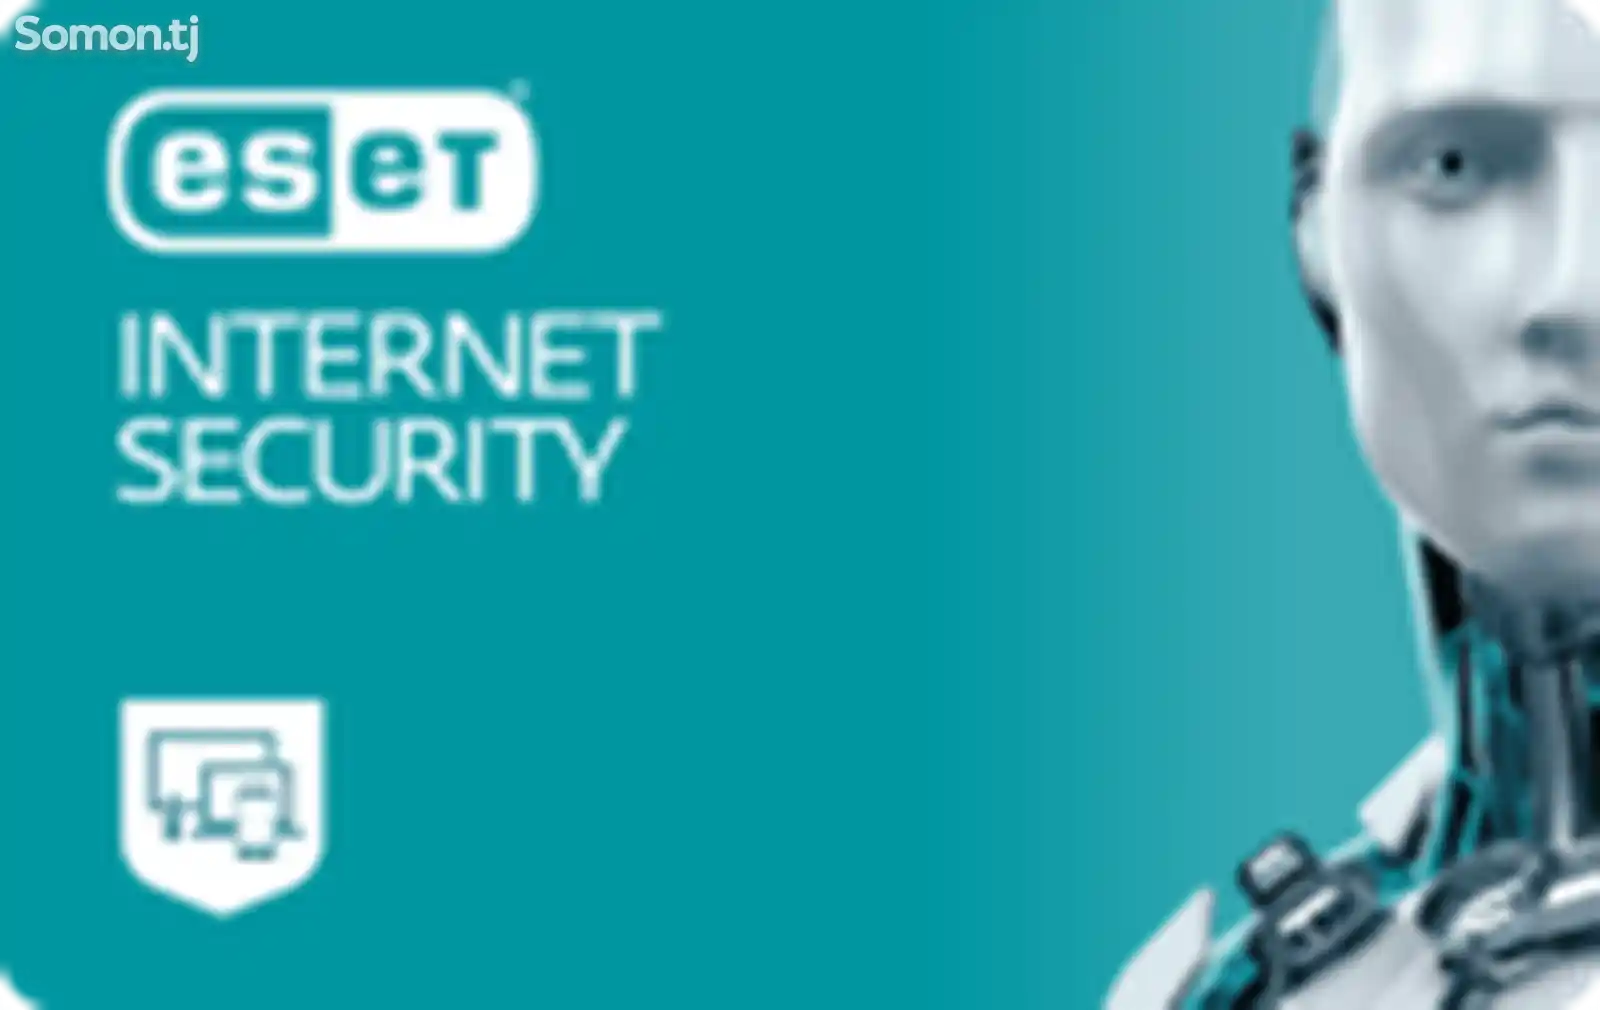 ESET Internet Security - иҷозатнома барои 5 роёна, 1 сол-1